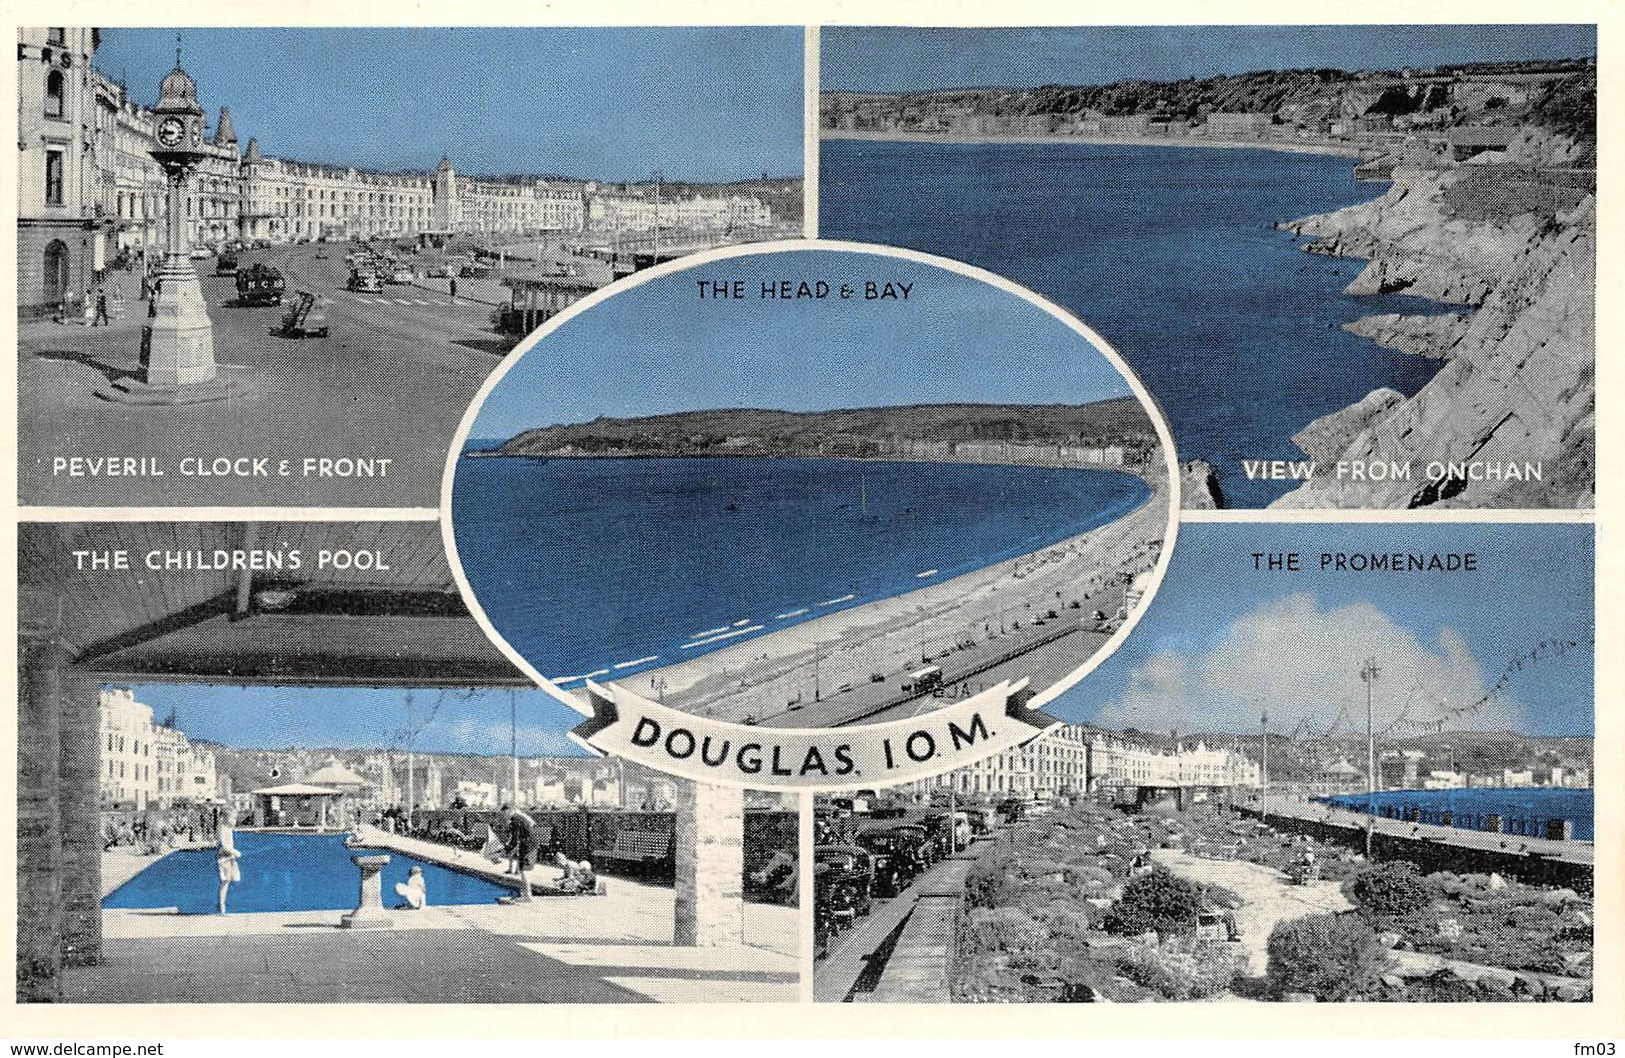 Douglas - Isle Of Man